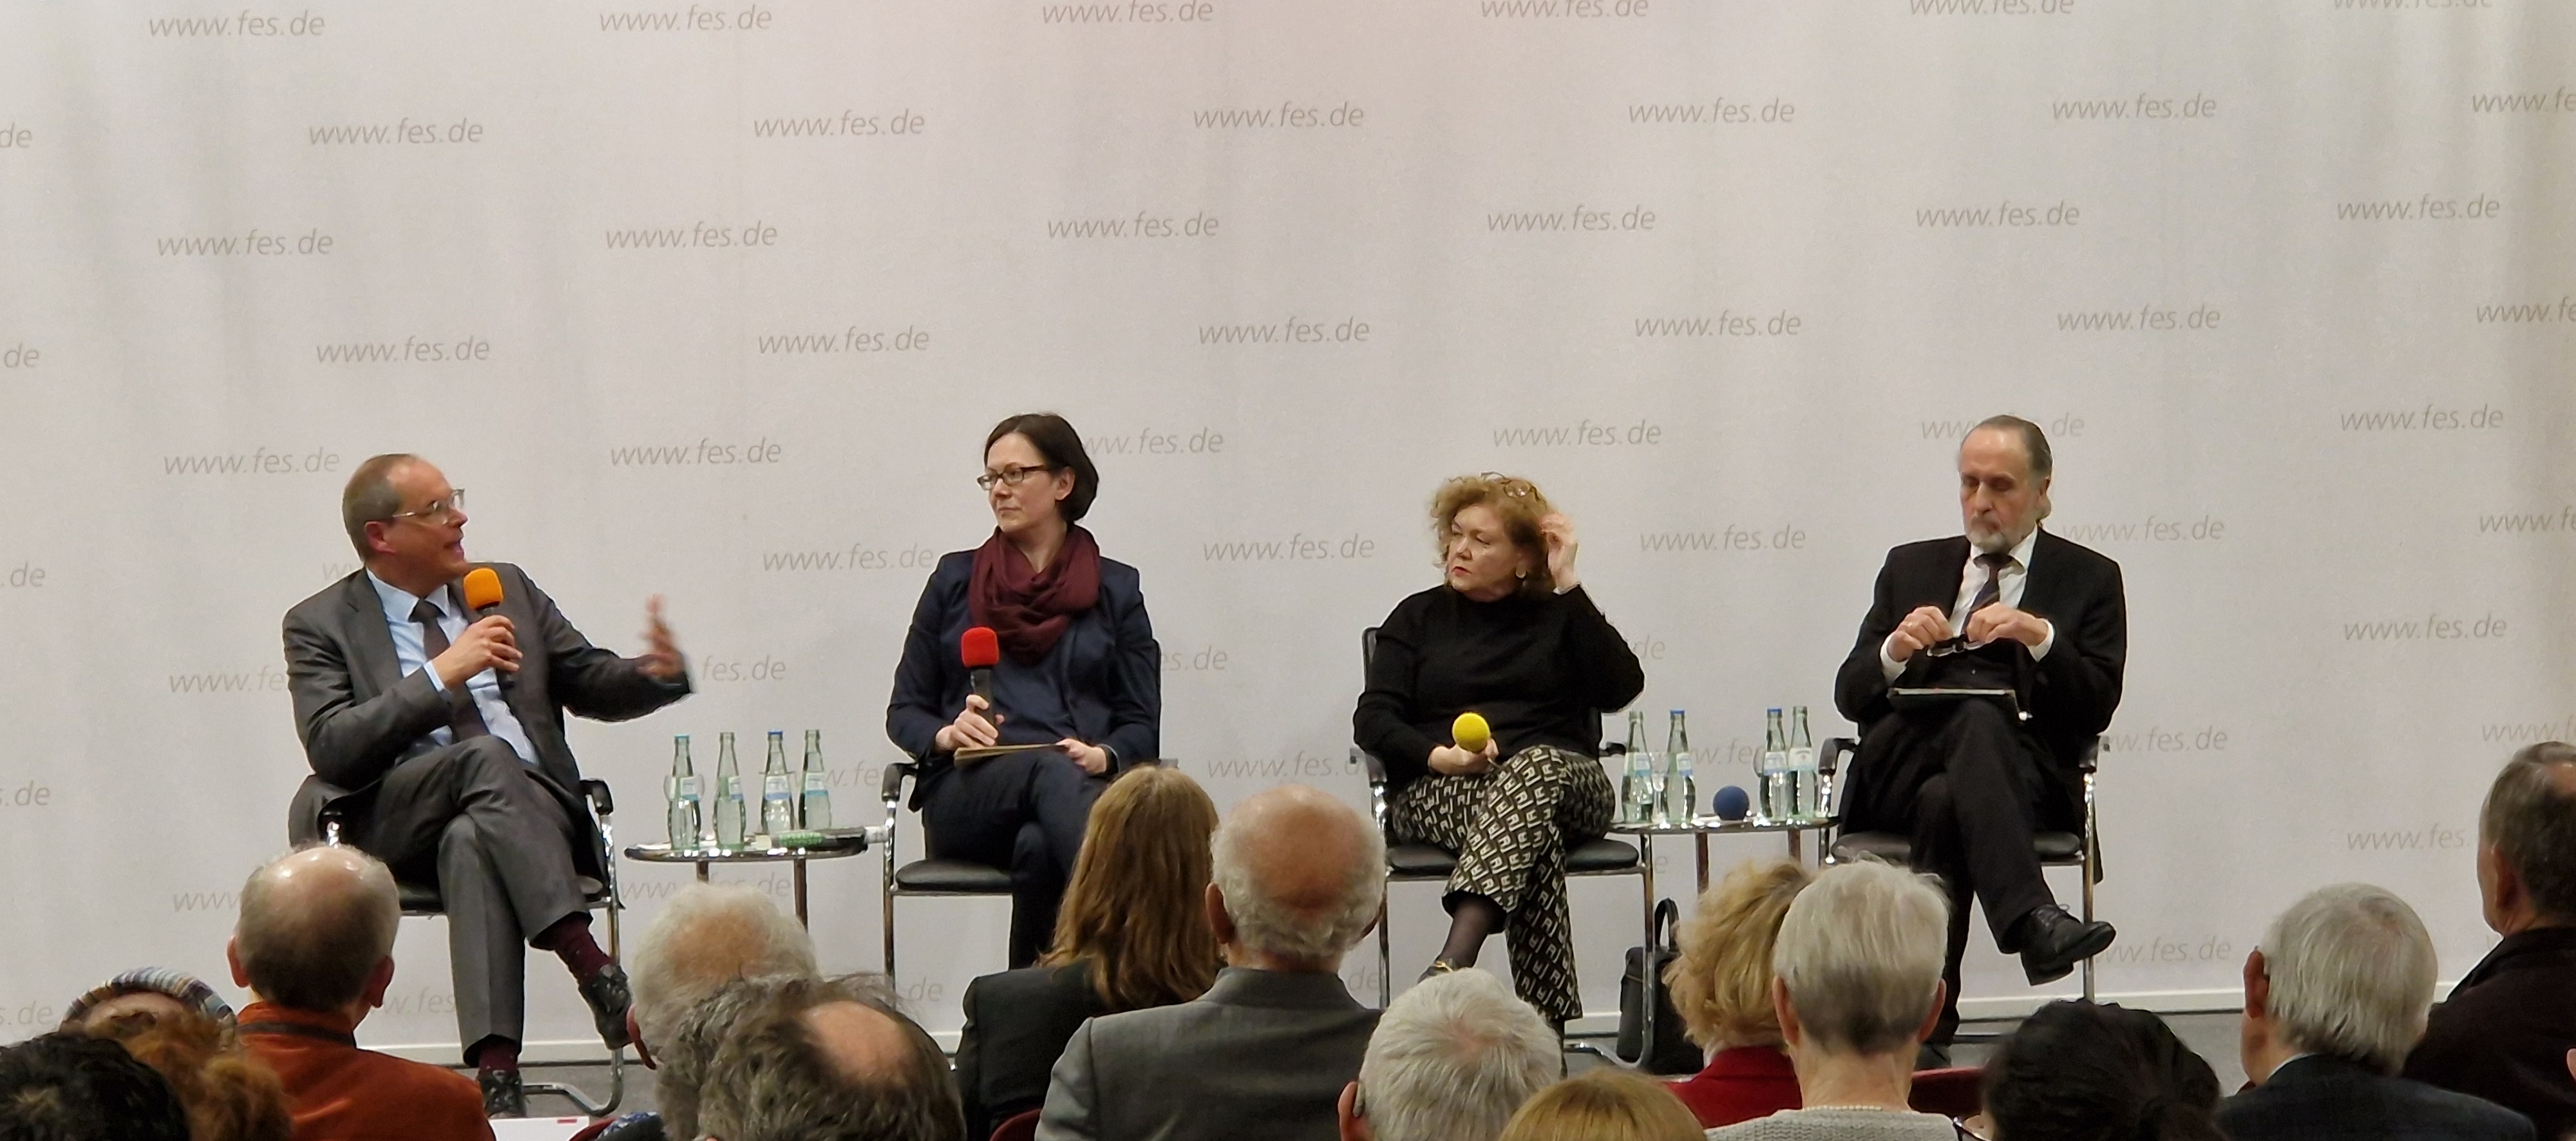 Das Podium: Friedrich Kießling, Alexandra Jaeger, Daniela Münkel und Klaus-Dietmar Henke